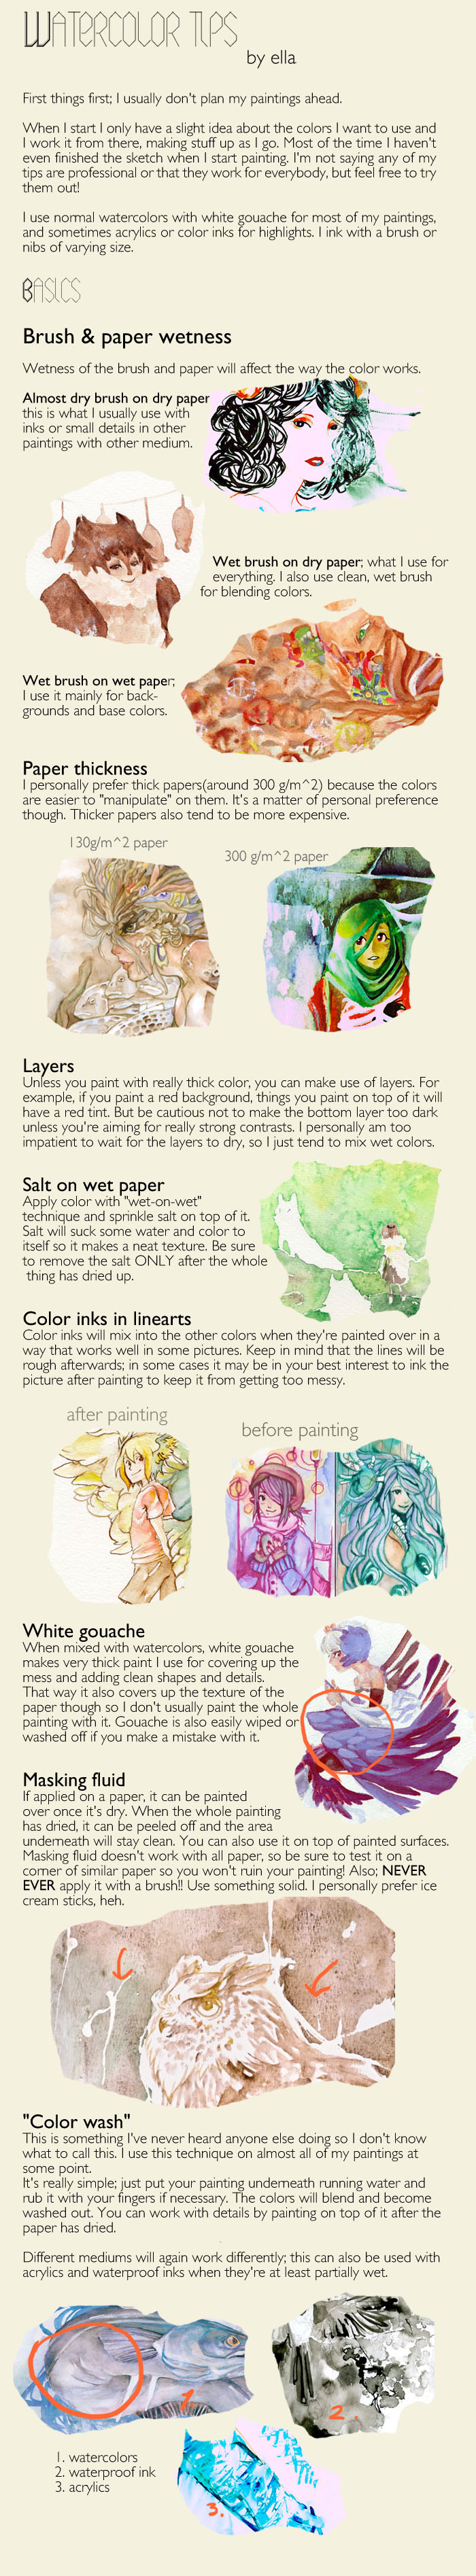 Watercoloring tips